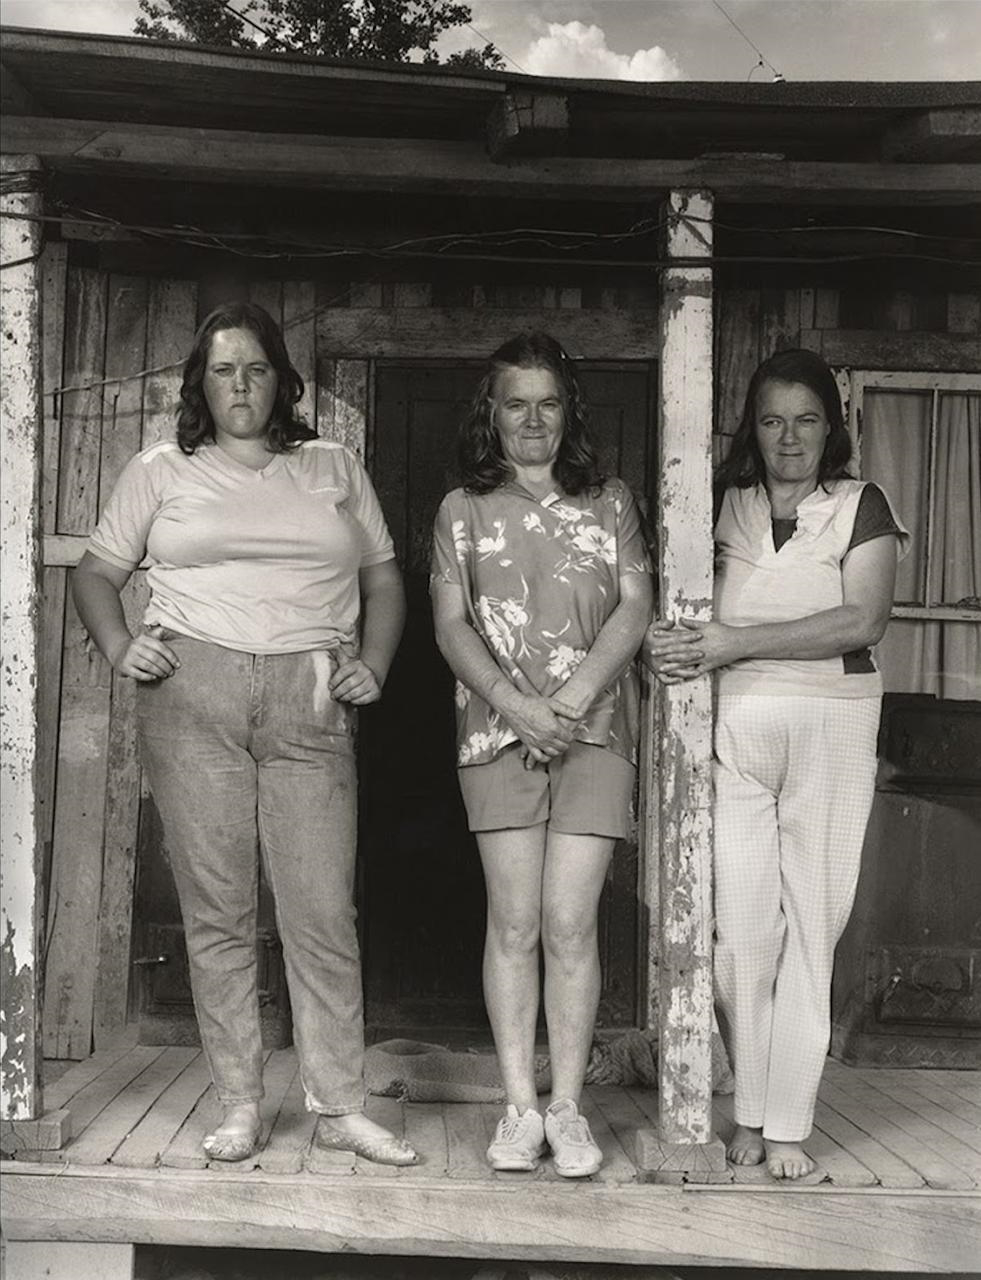  Photograph by Shelby Lee Adams&nbsp;  The Lynn Fork Women , 1989   Edition: 1/25  Toned Gelatin Silver Print  16 x 20 in. (image size) &nbsp;©2022 Shelby Lee Adams&nbsp; The Do Good Fund, Inc., 2014-043 